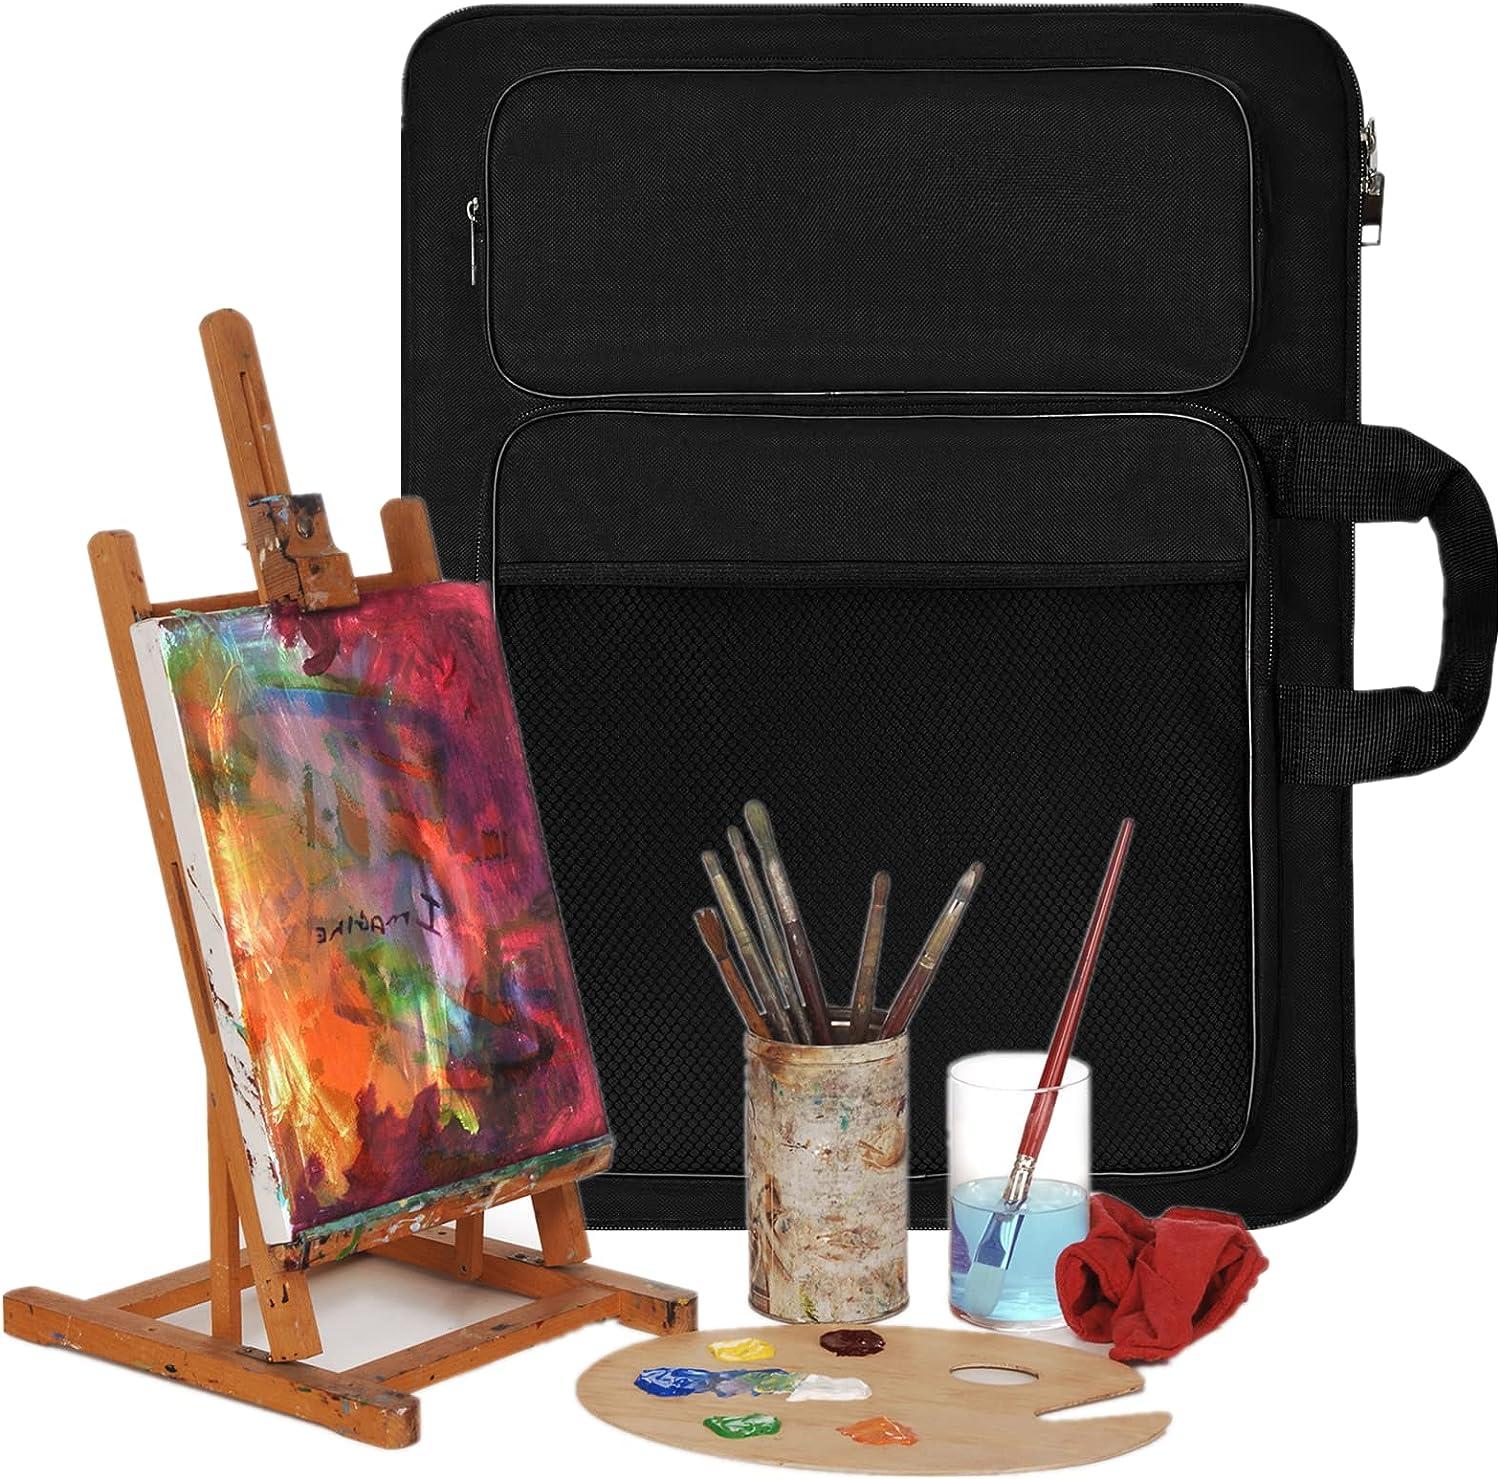  TreochtFUN Art Portfolio kids, Drawing Supply Bag 15x18 In For  Children Art Lesson,Art Case Storage Sketchbook,Drawing Pencil,Art Set.  (Pink) : Arts, Crafts & Sewing